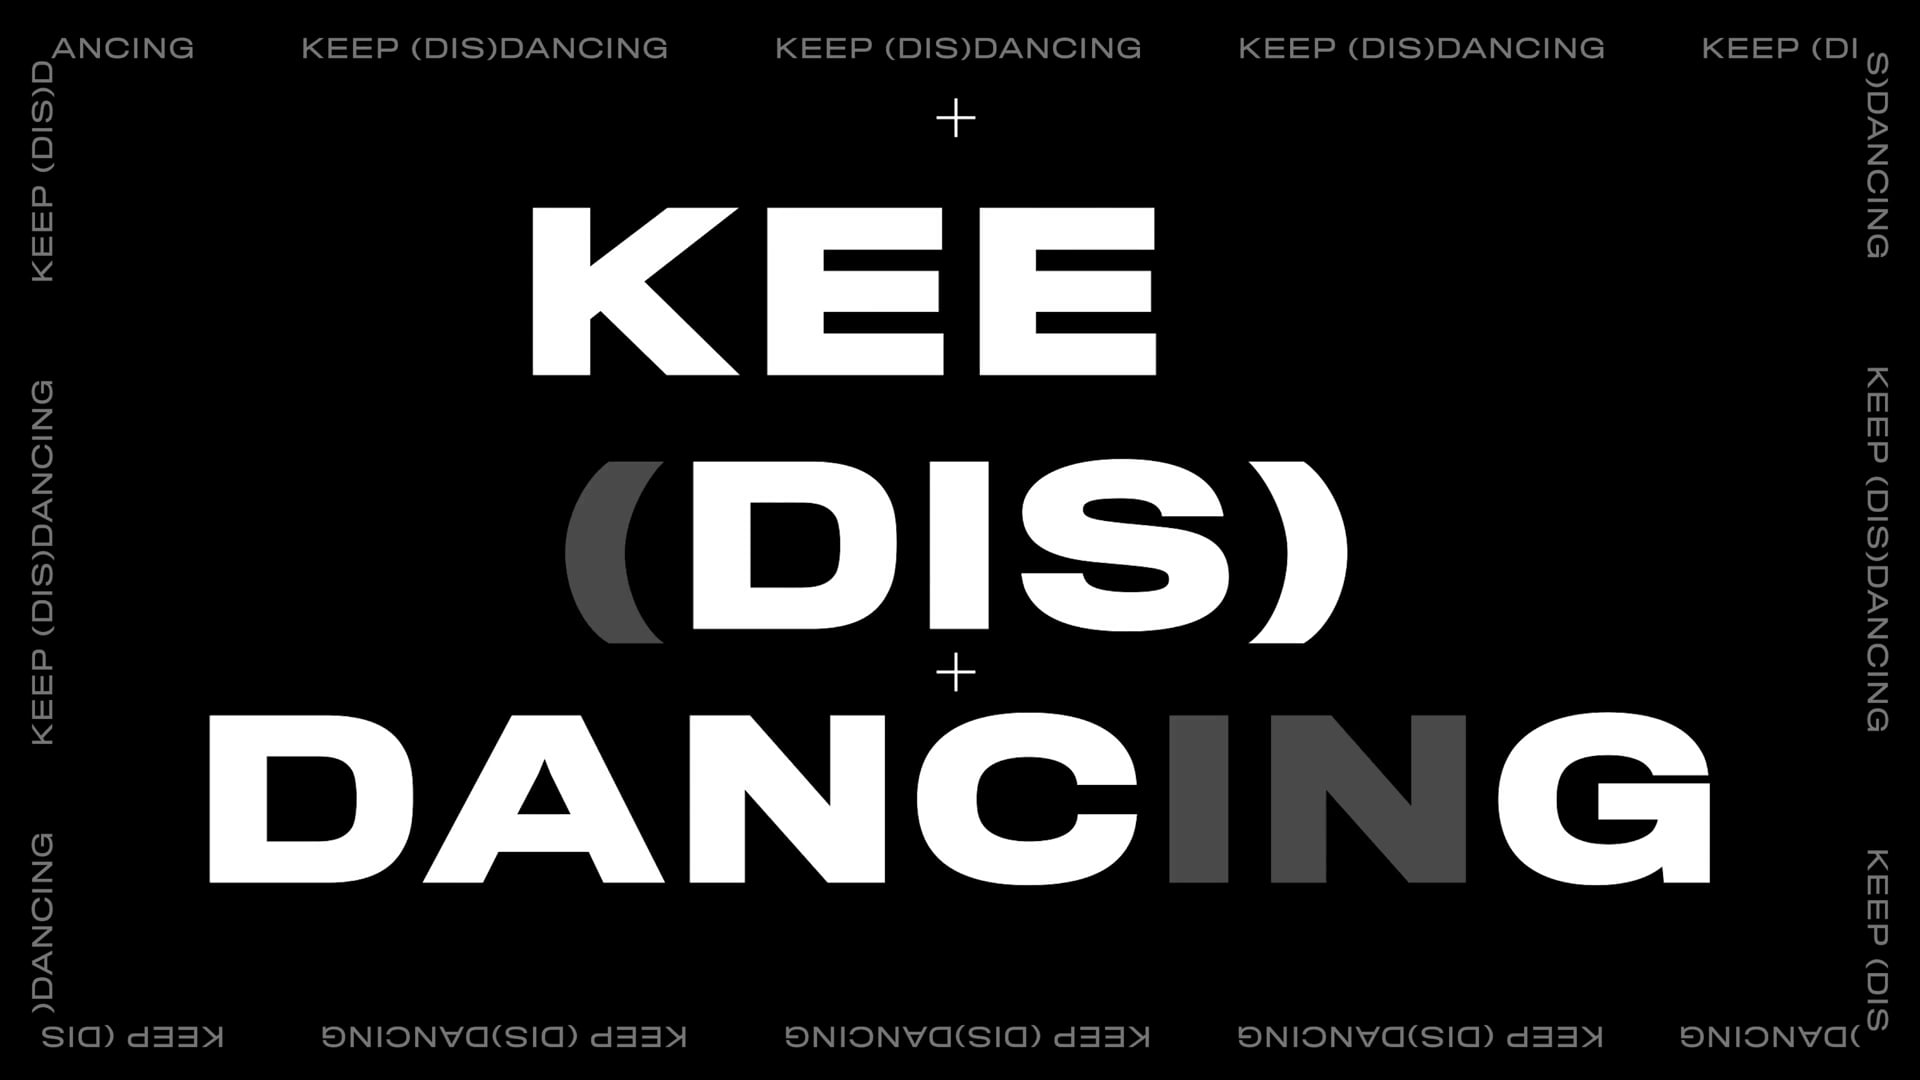 Keep (dis) dancing